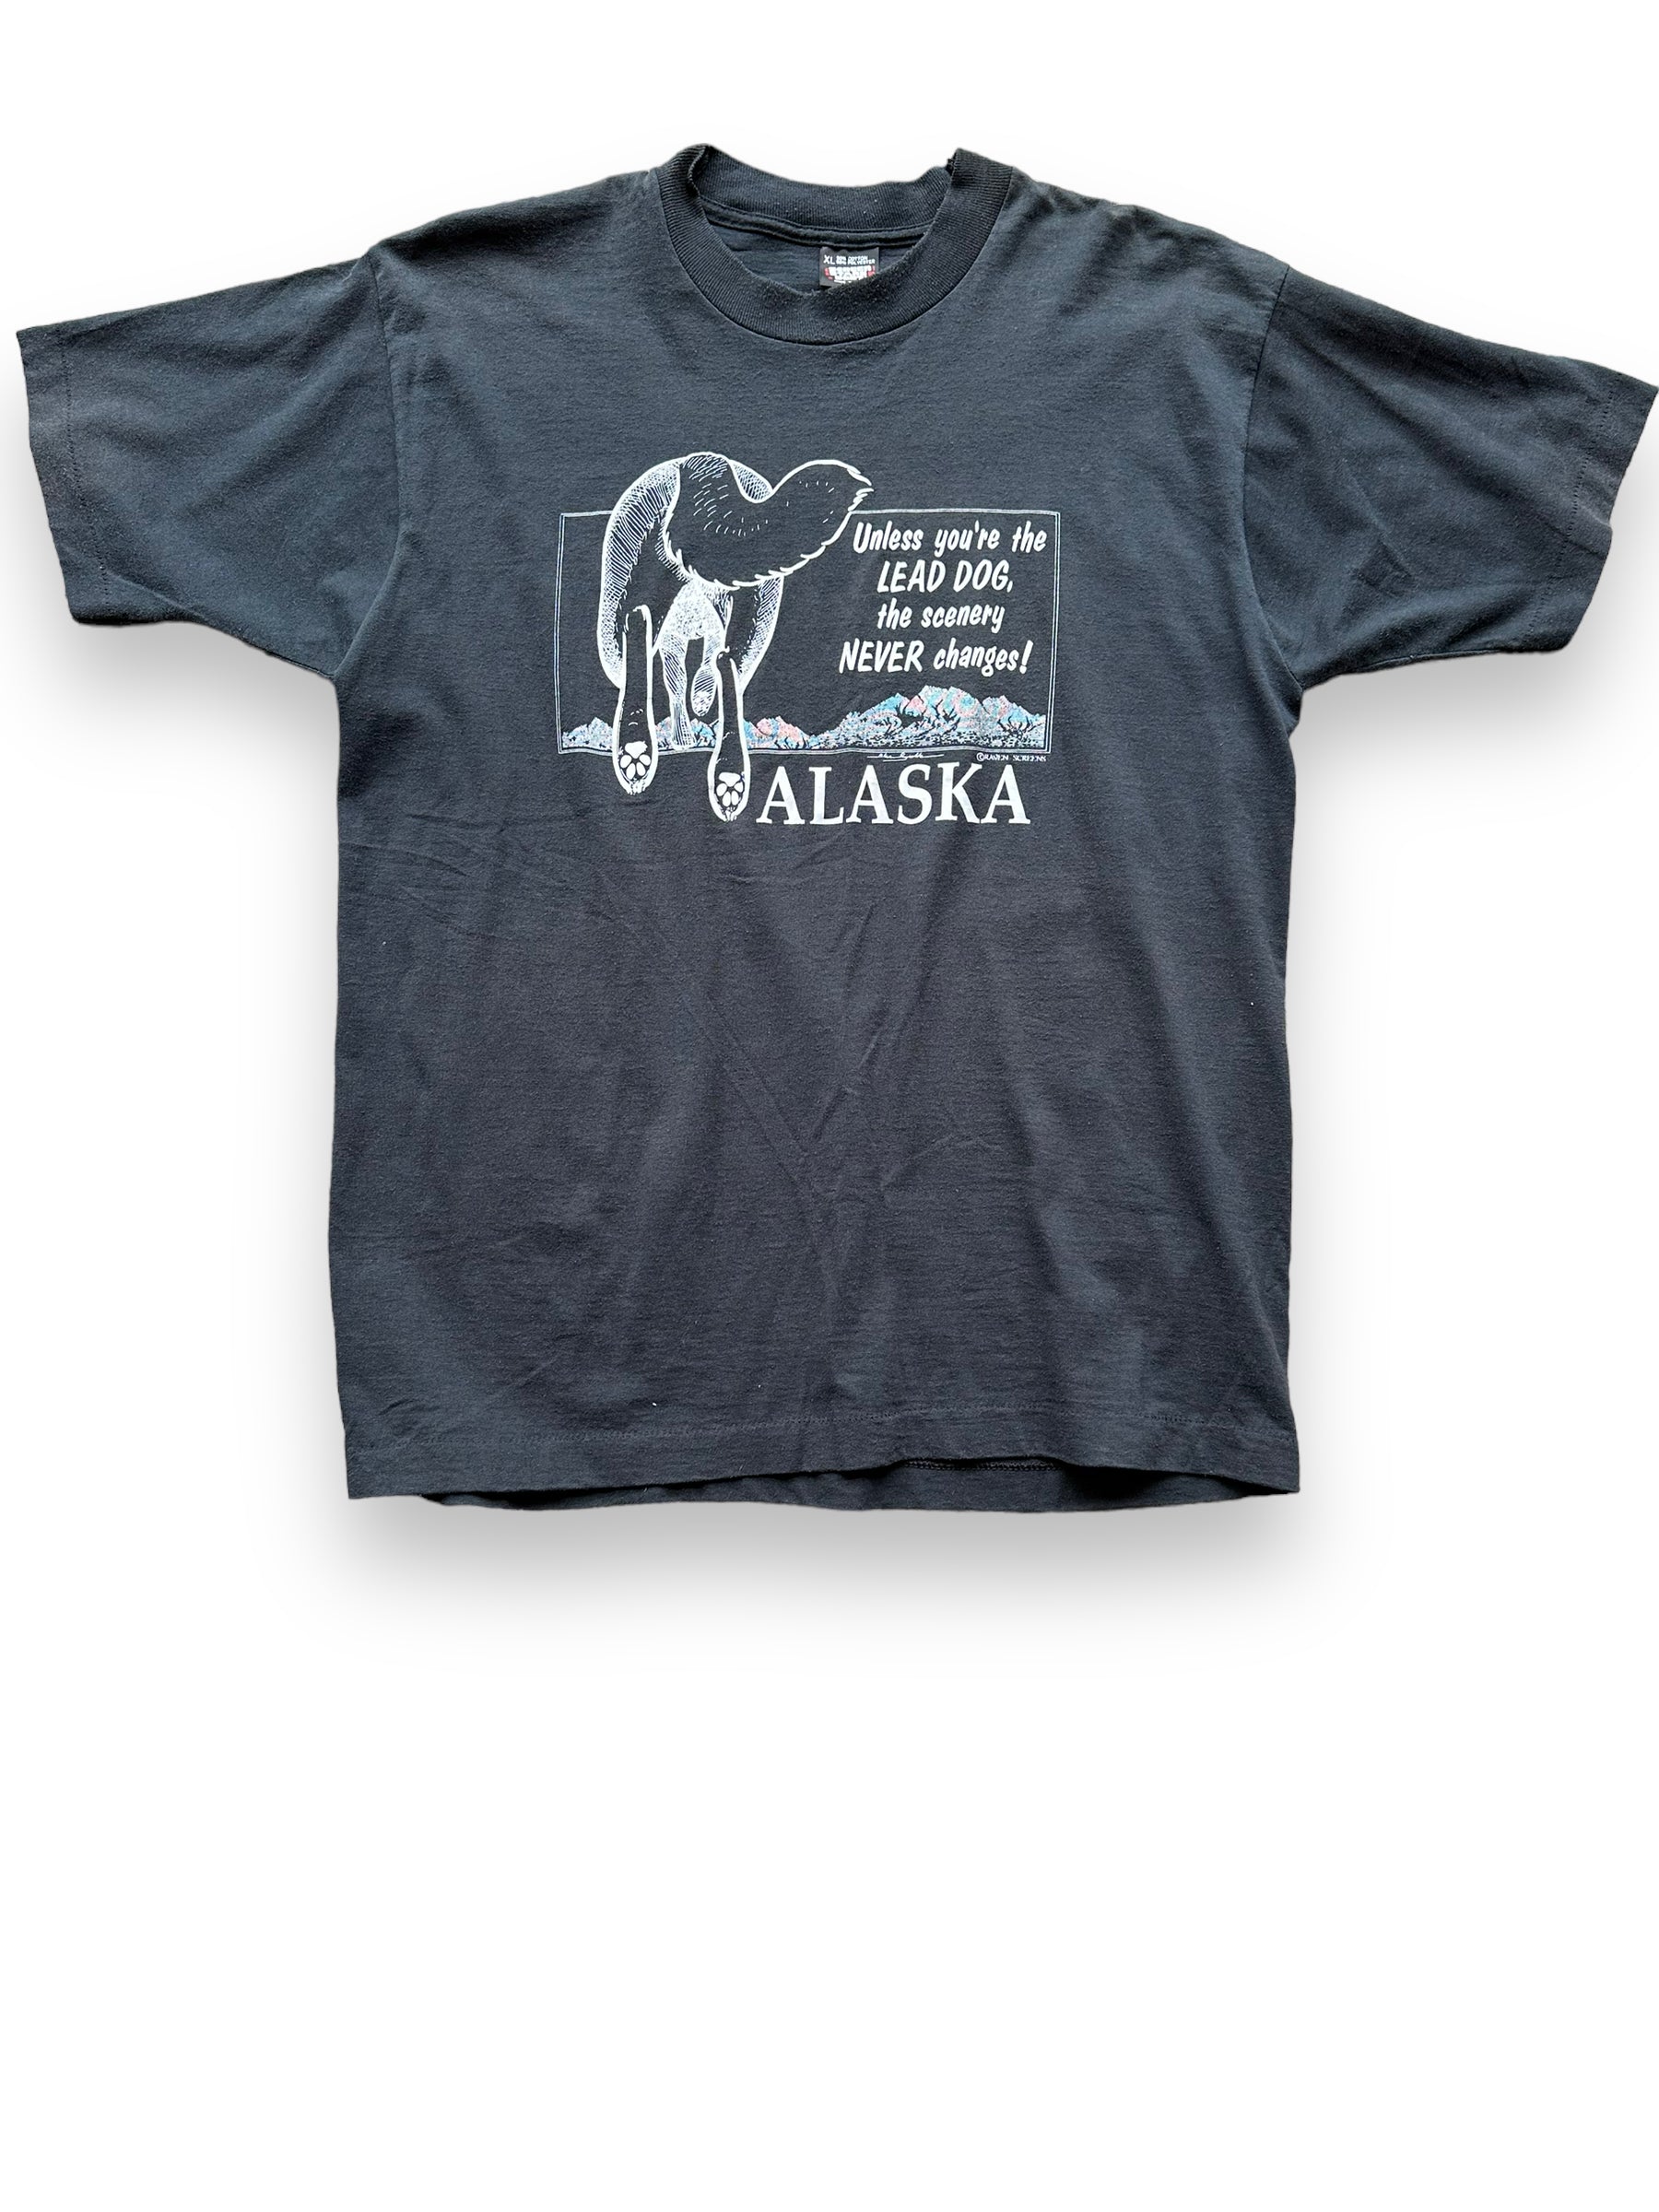 Front of Vintage Unless You're the Lead Dog Alaska Tee SZ XL | Vintage Alaska T-Shirts Seattle | Barn Owl Vintage Tees Seattle